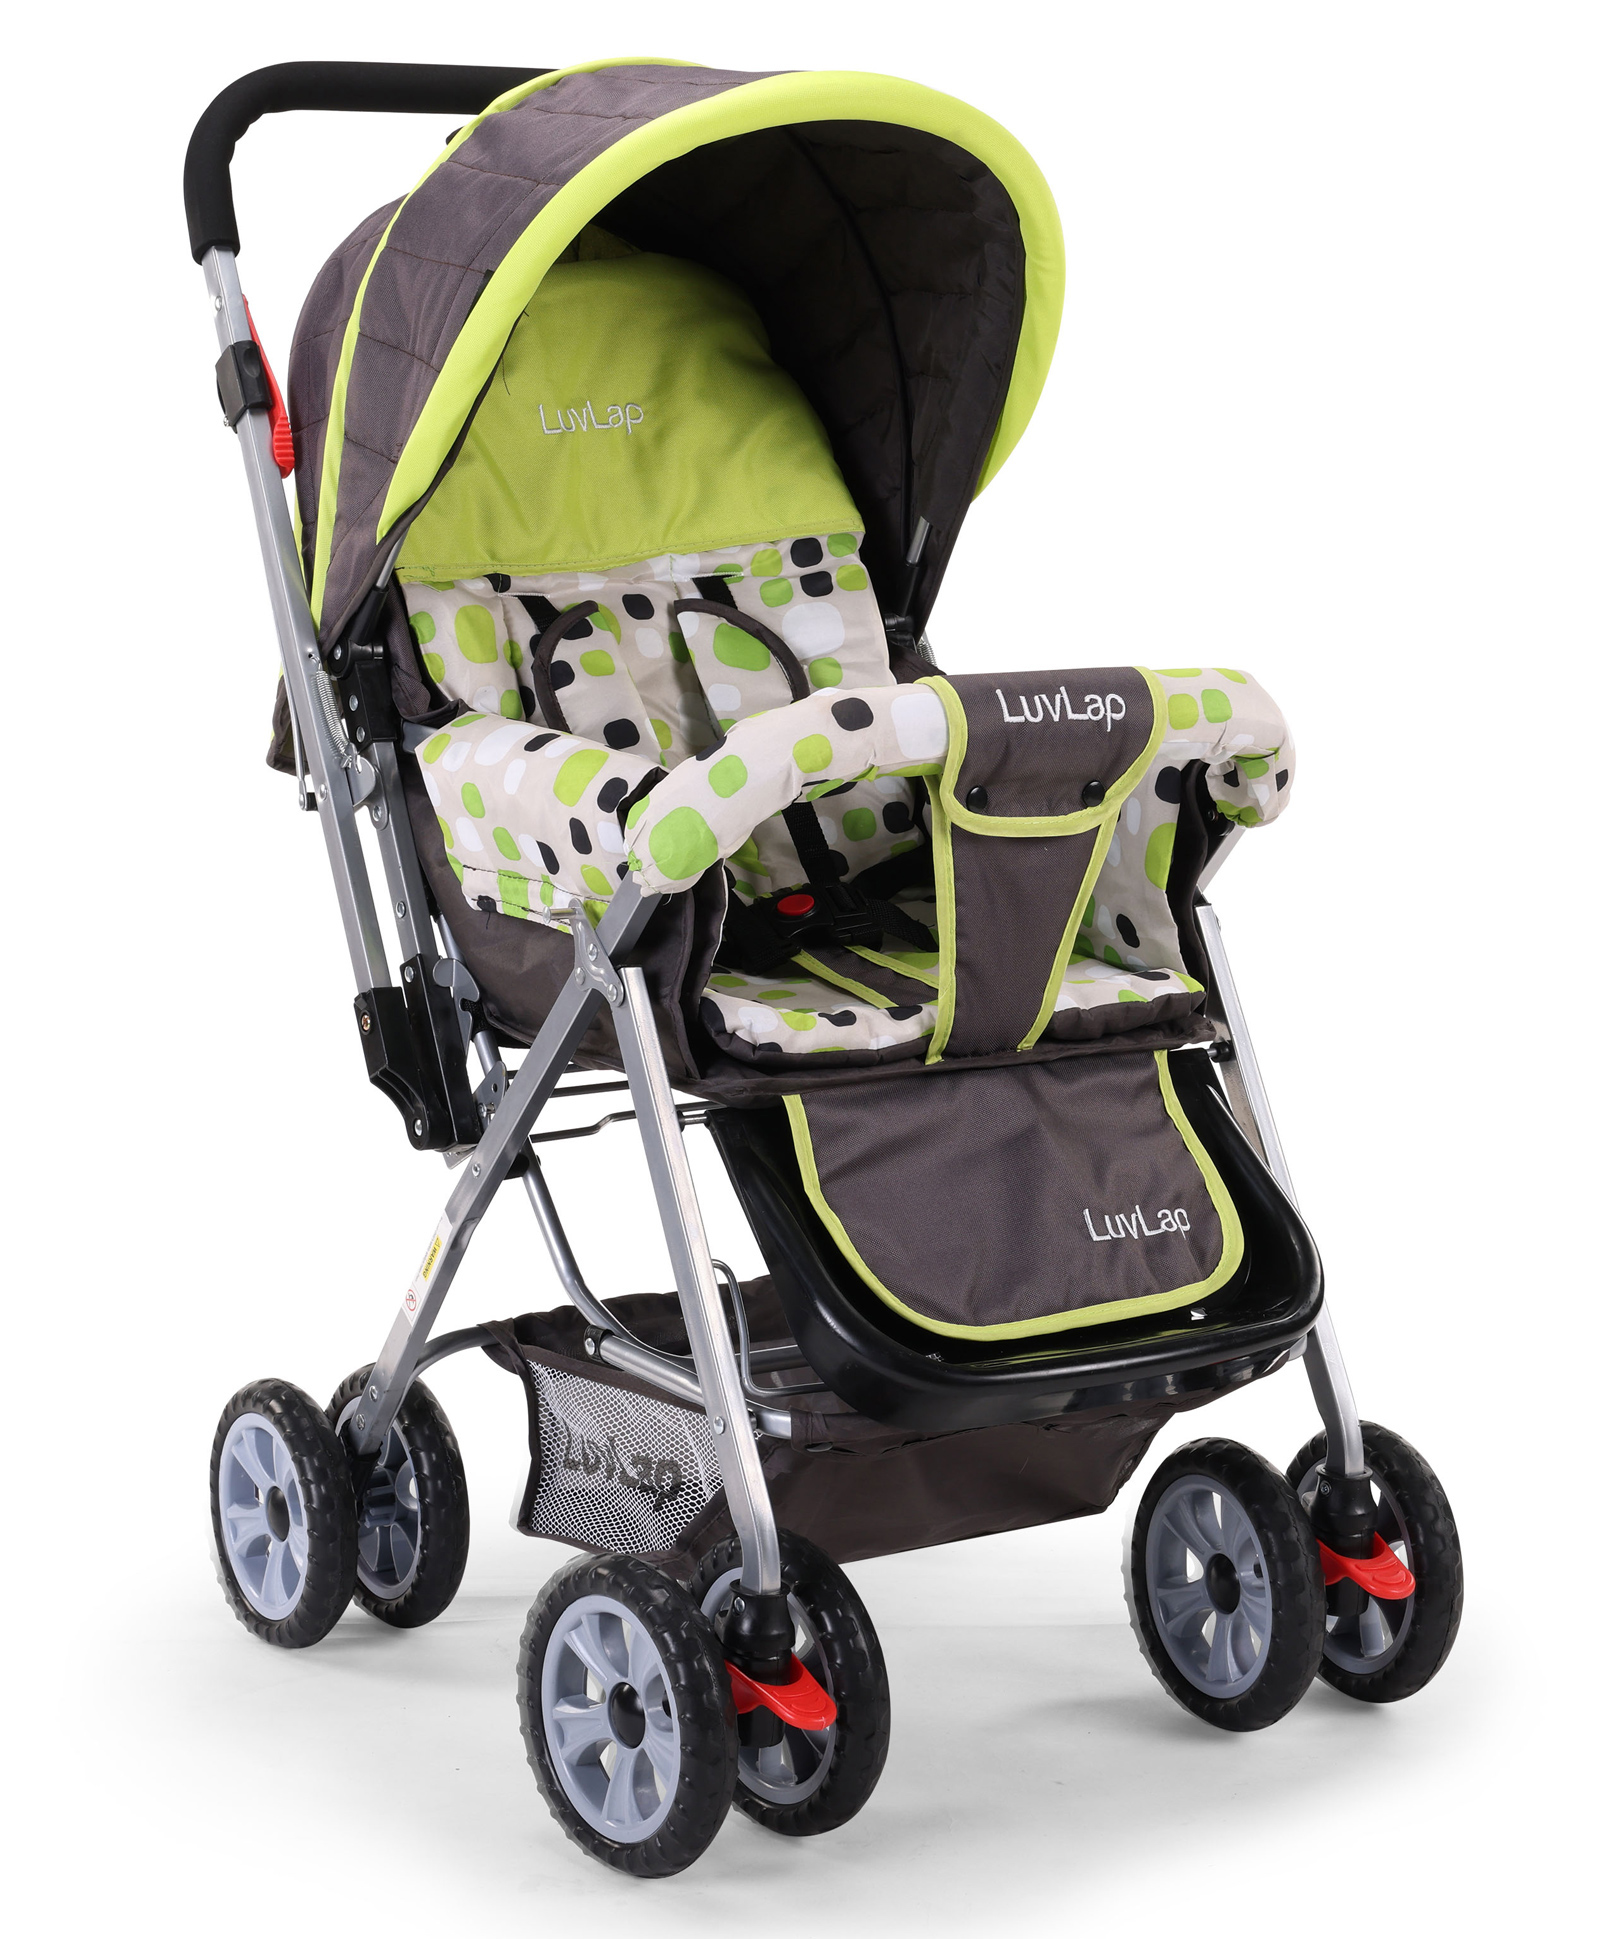 green baby stroller